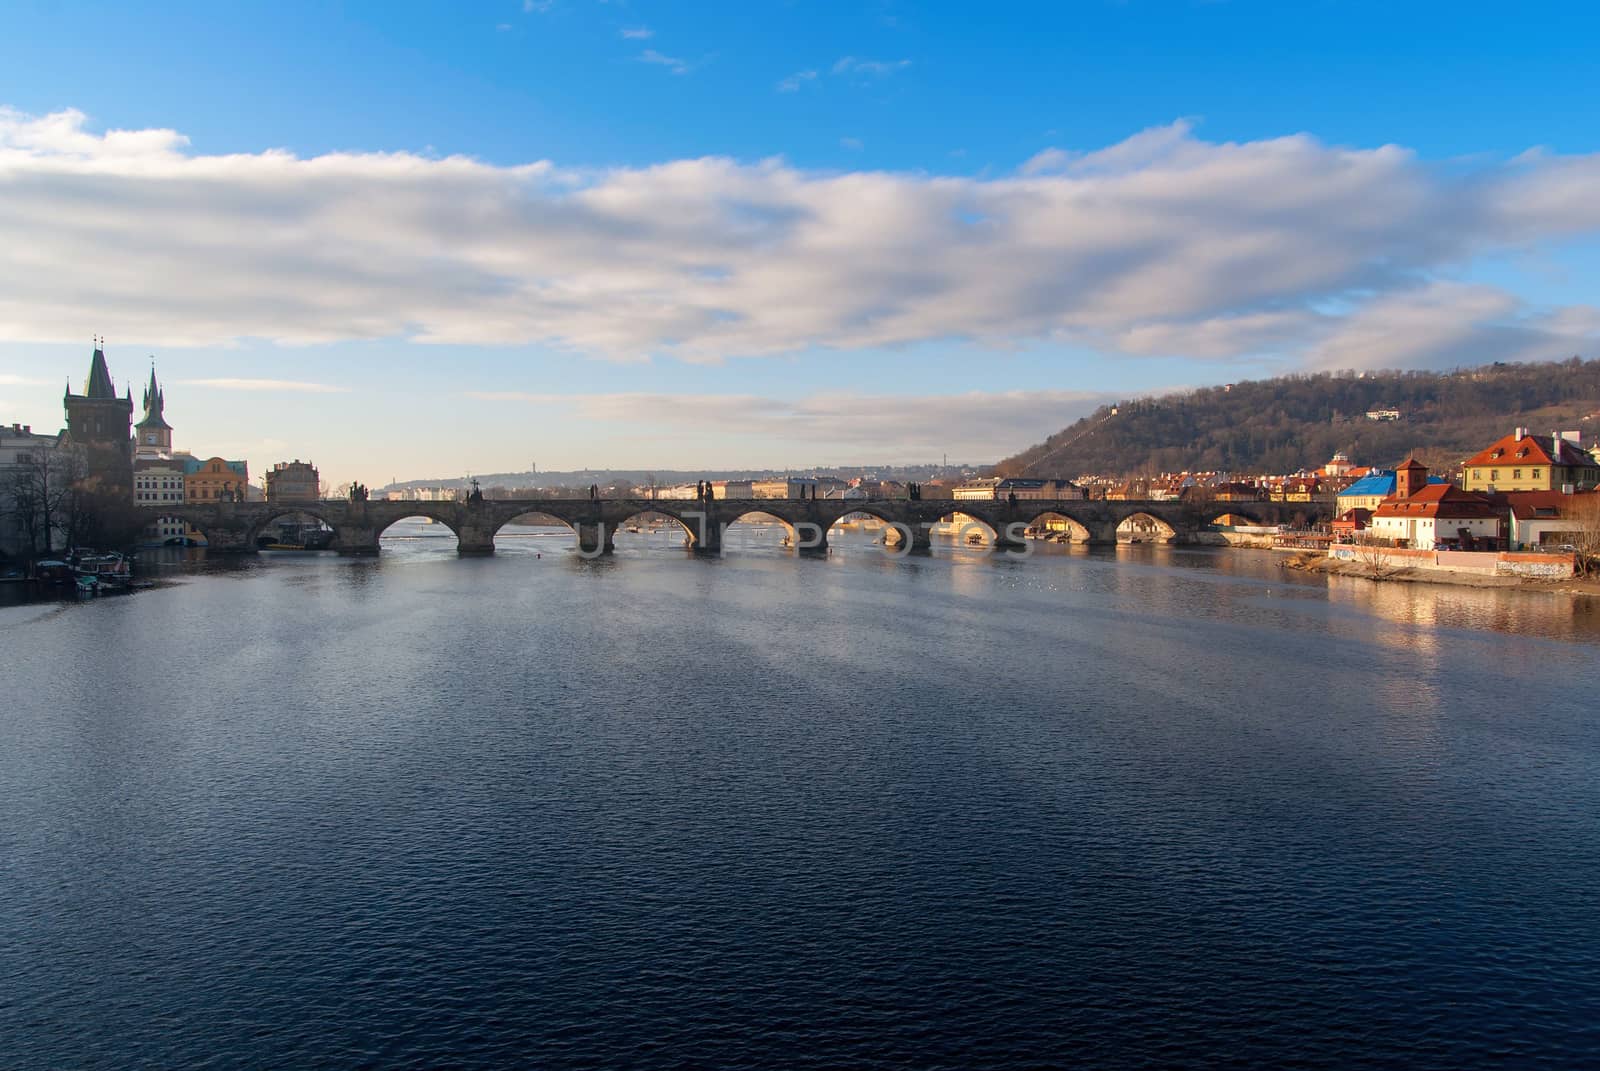 Charles Bridge and the Vltava River in the morning, Prague, Czech Republic